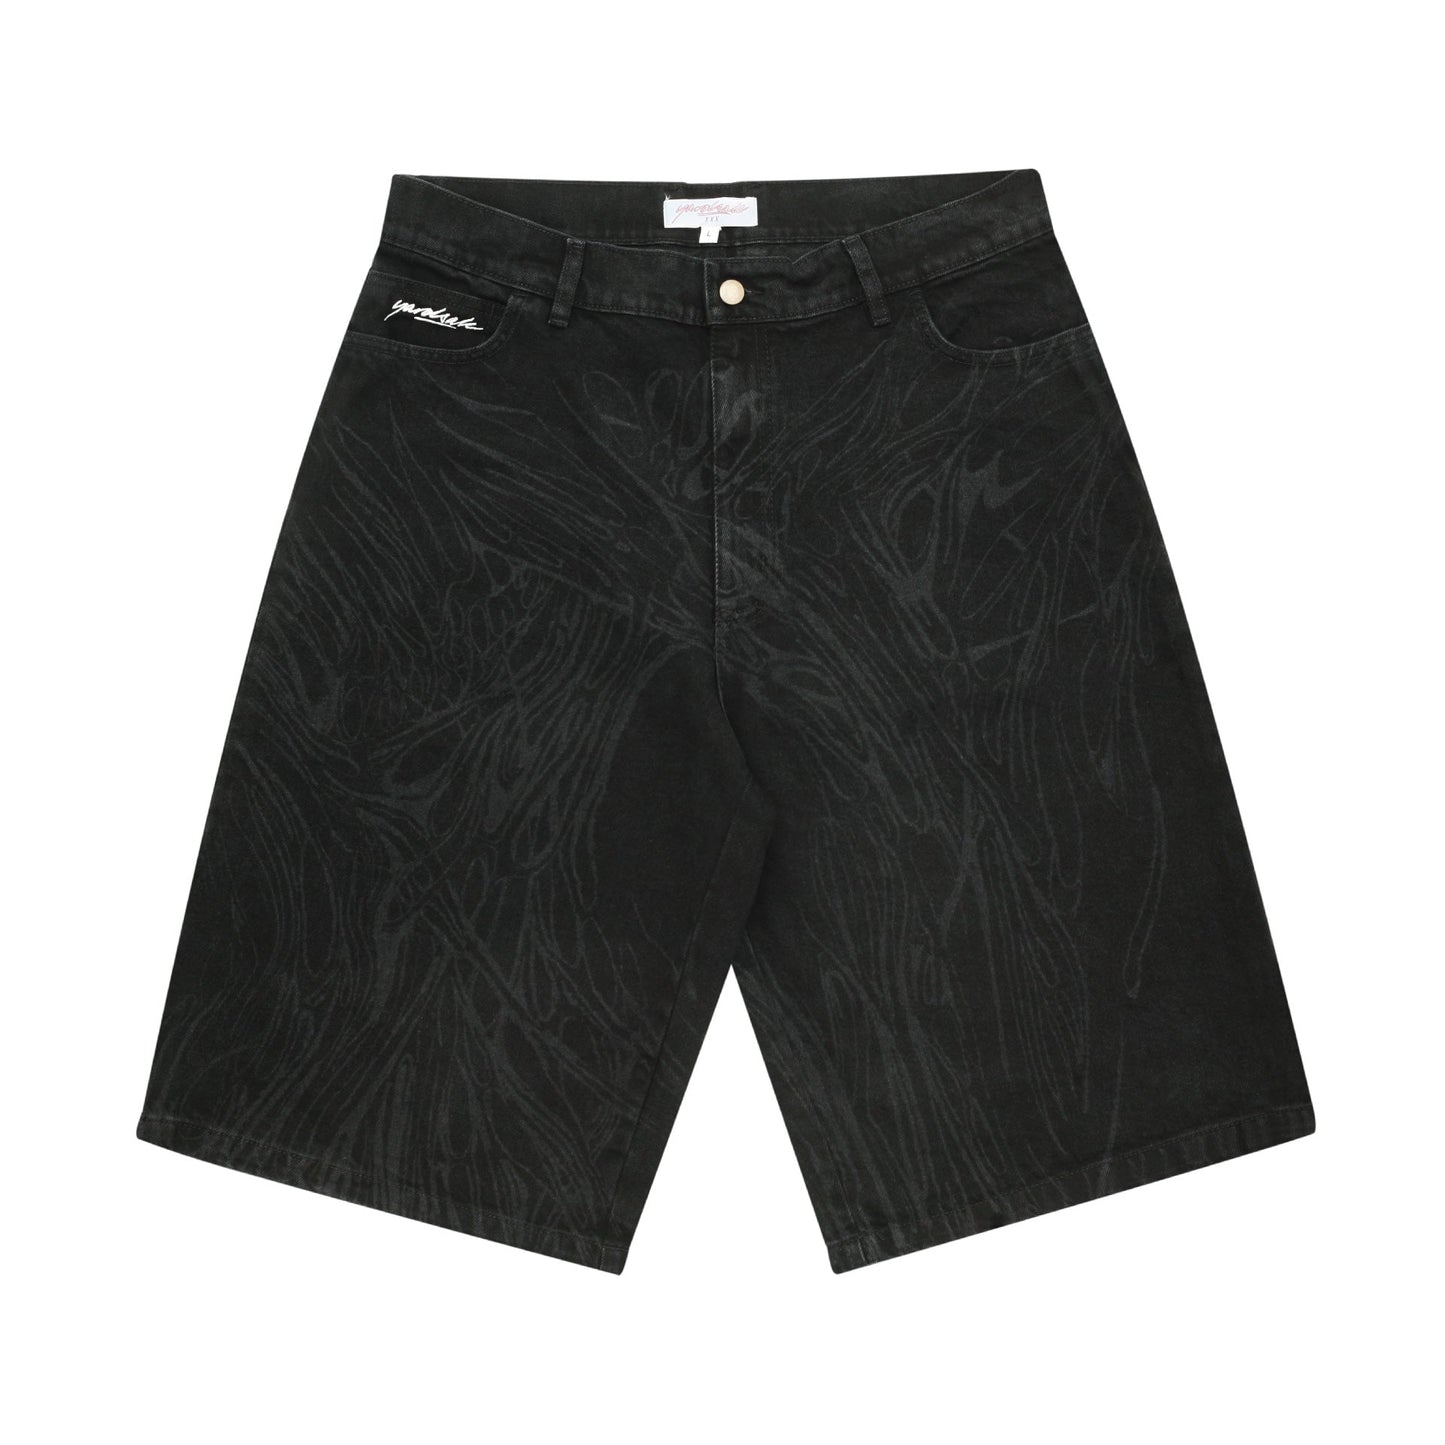 Ripper Shorts (Black)